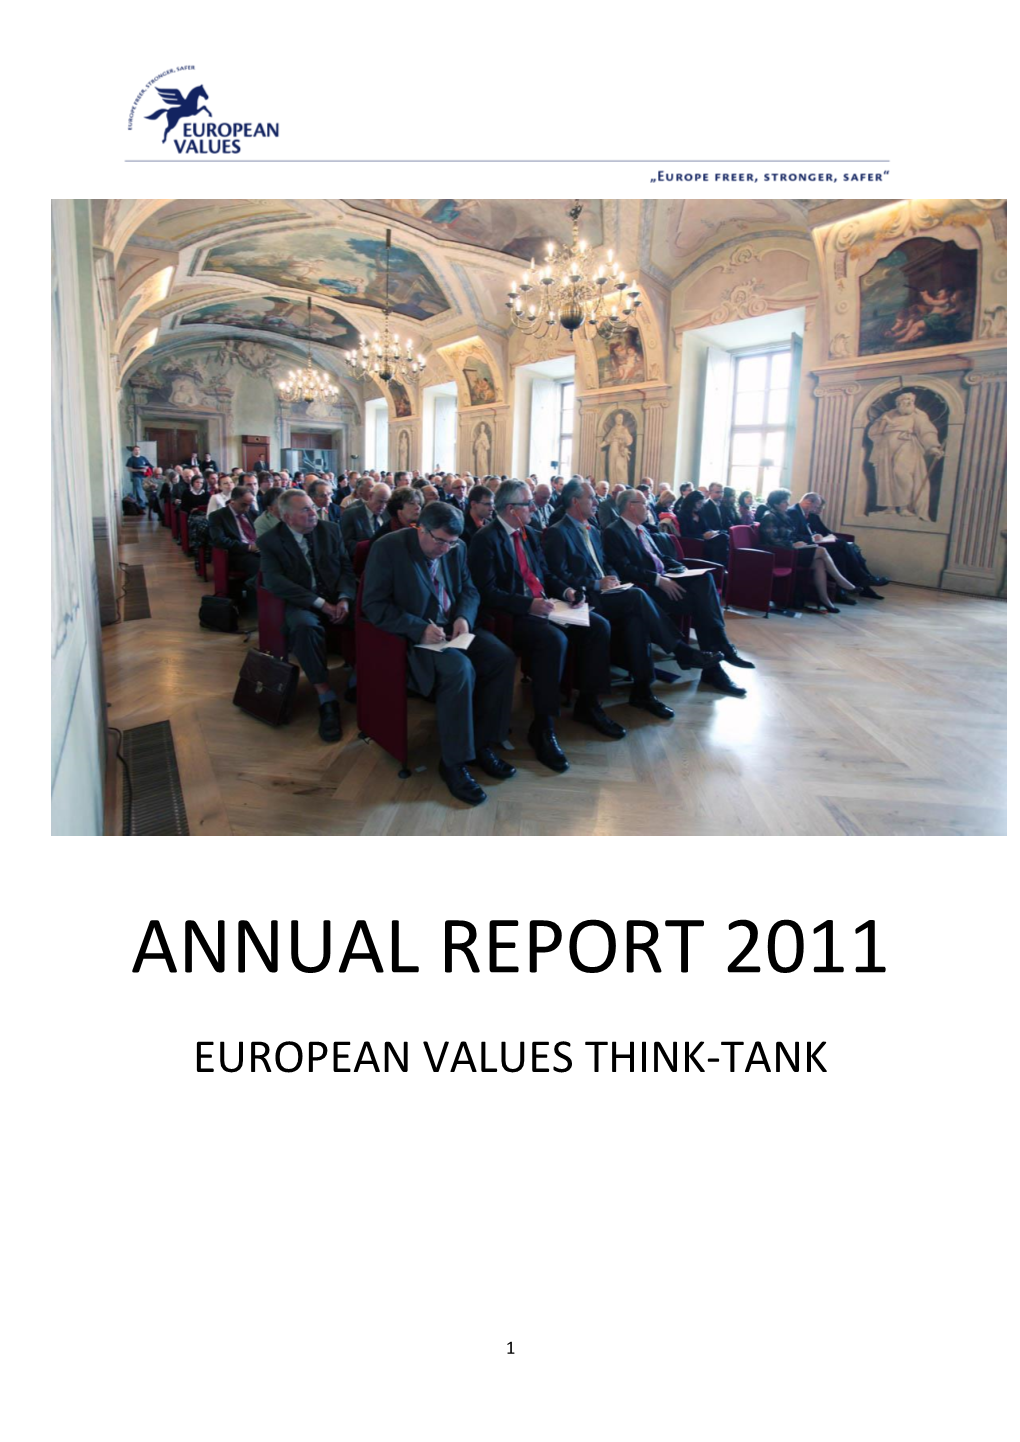 Annual Report 2011 European Values Think-Tank